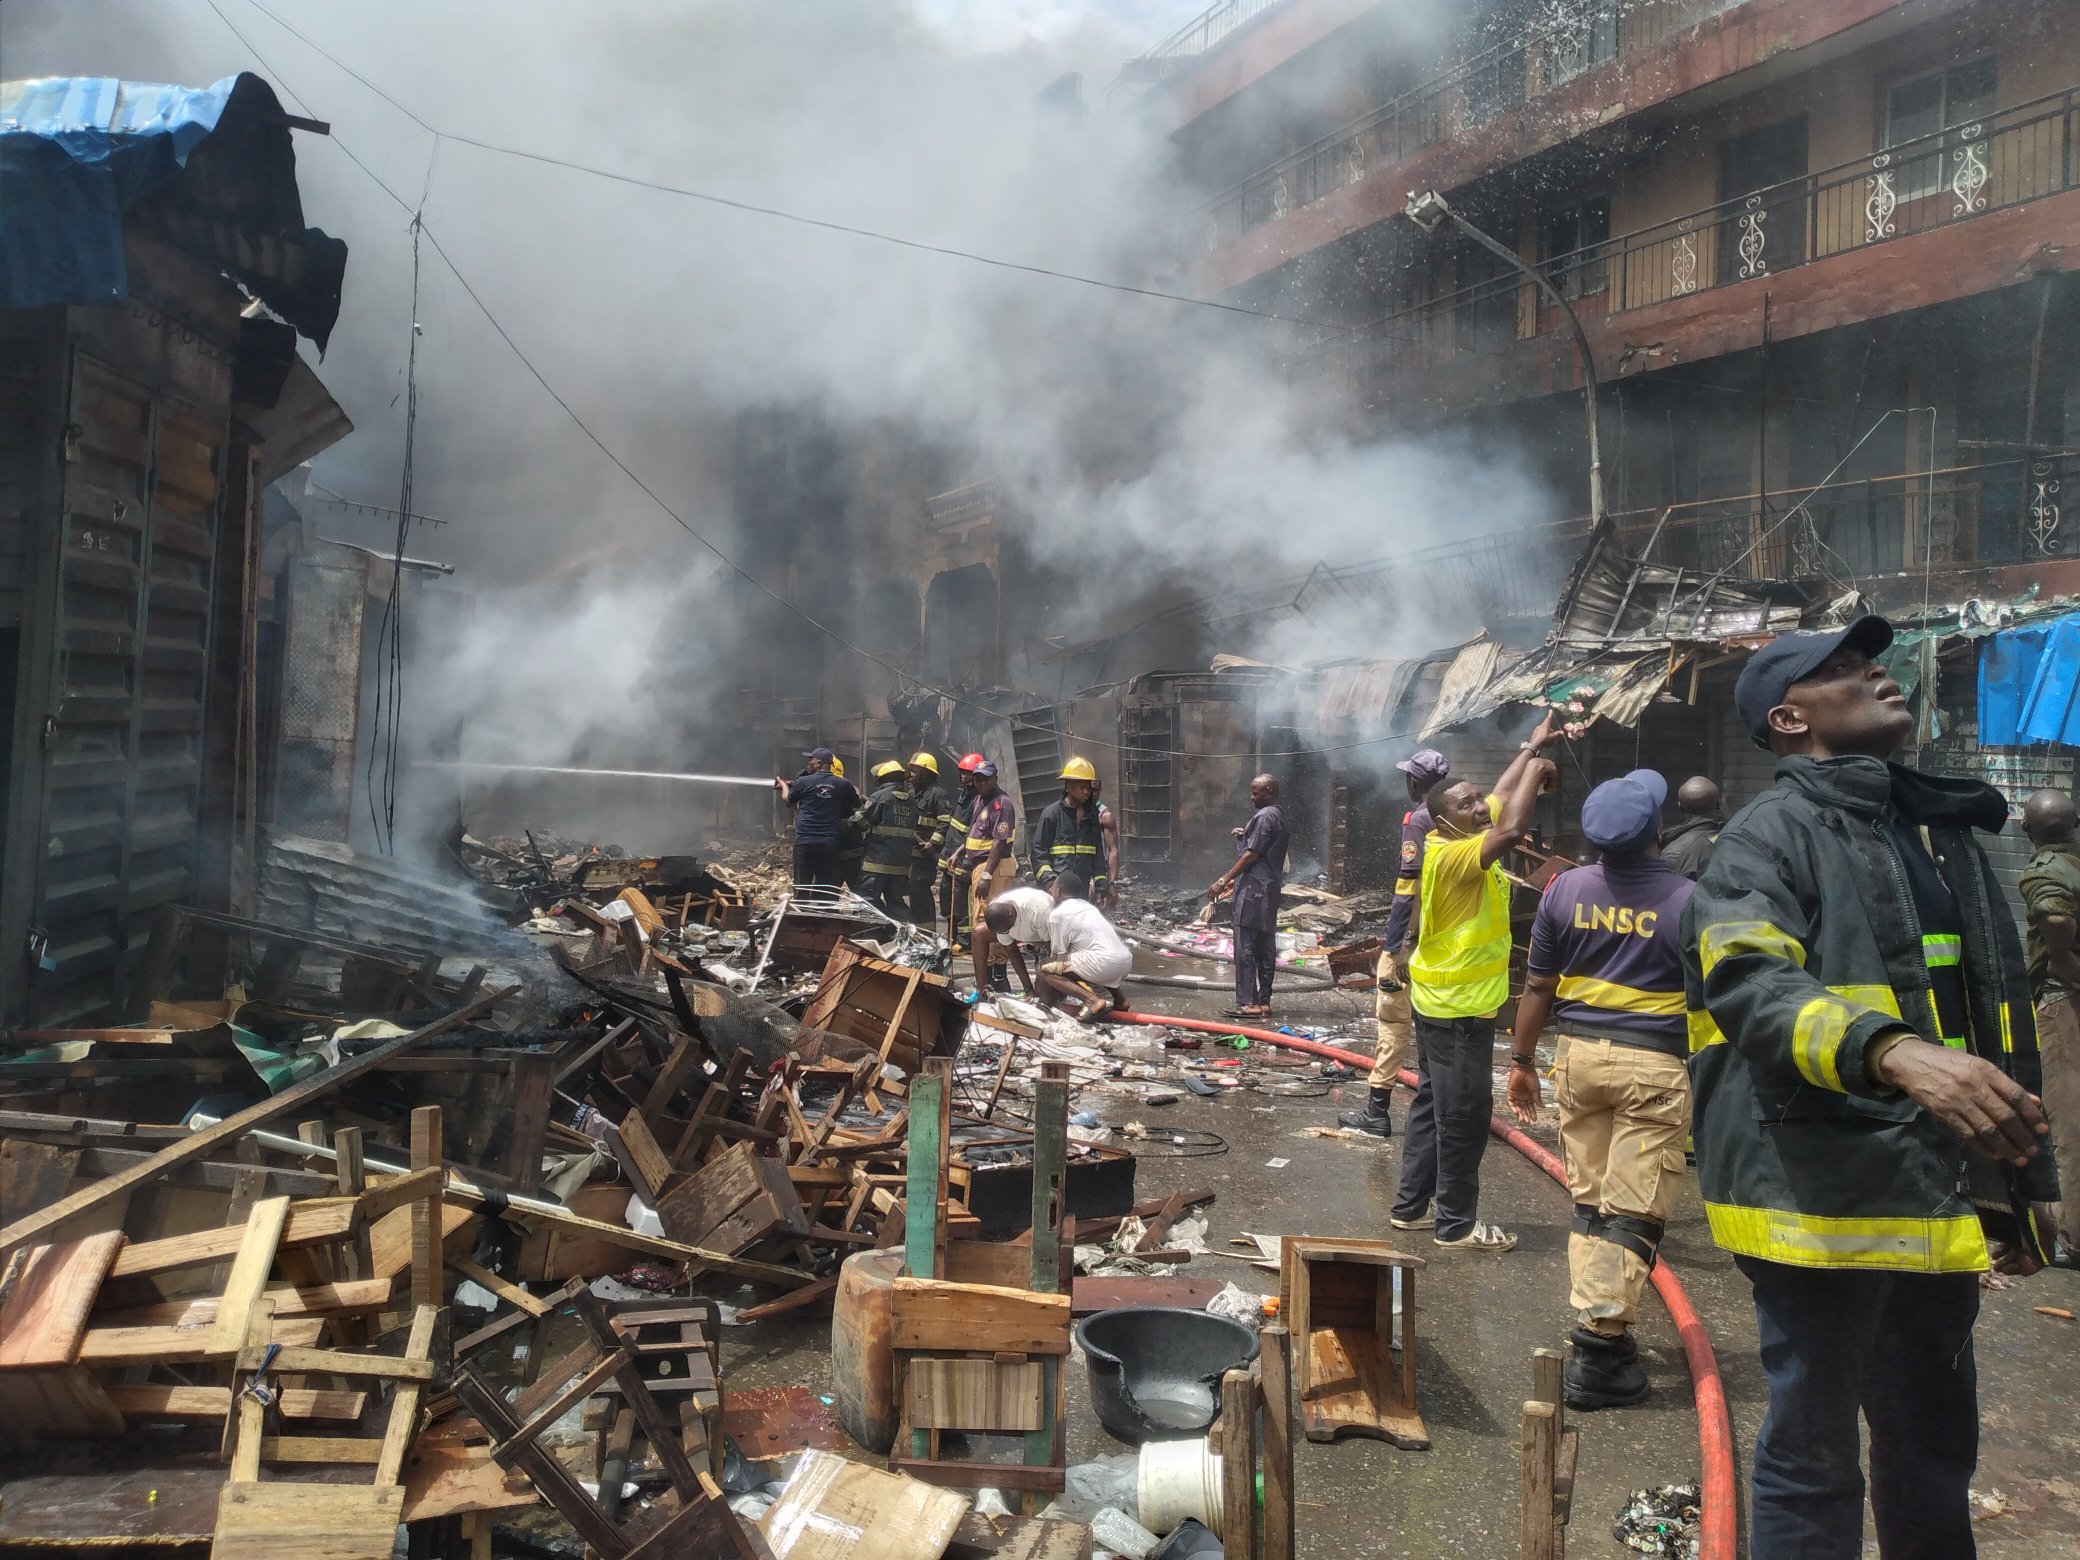 The scene of the fire incident near Jankara Street, adjacent to Docemo Street, on Lagos Island